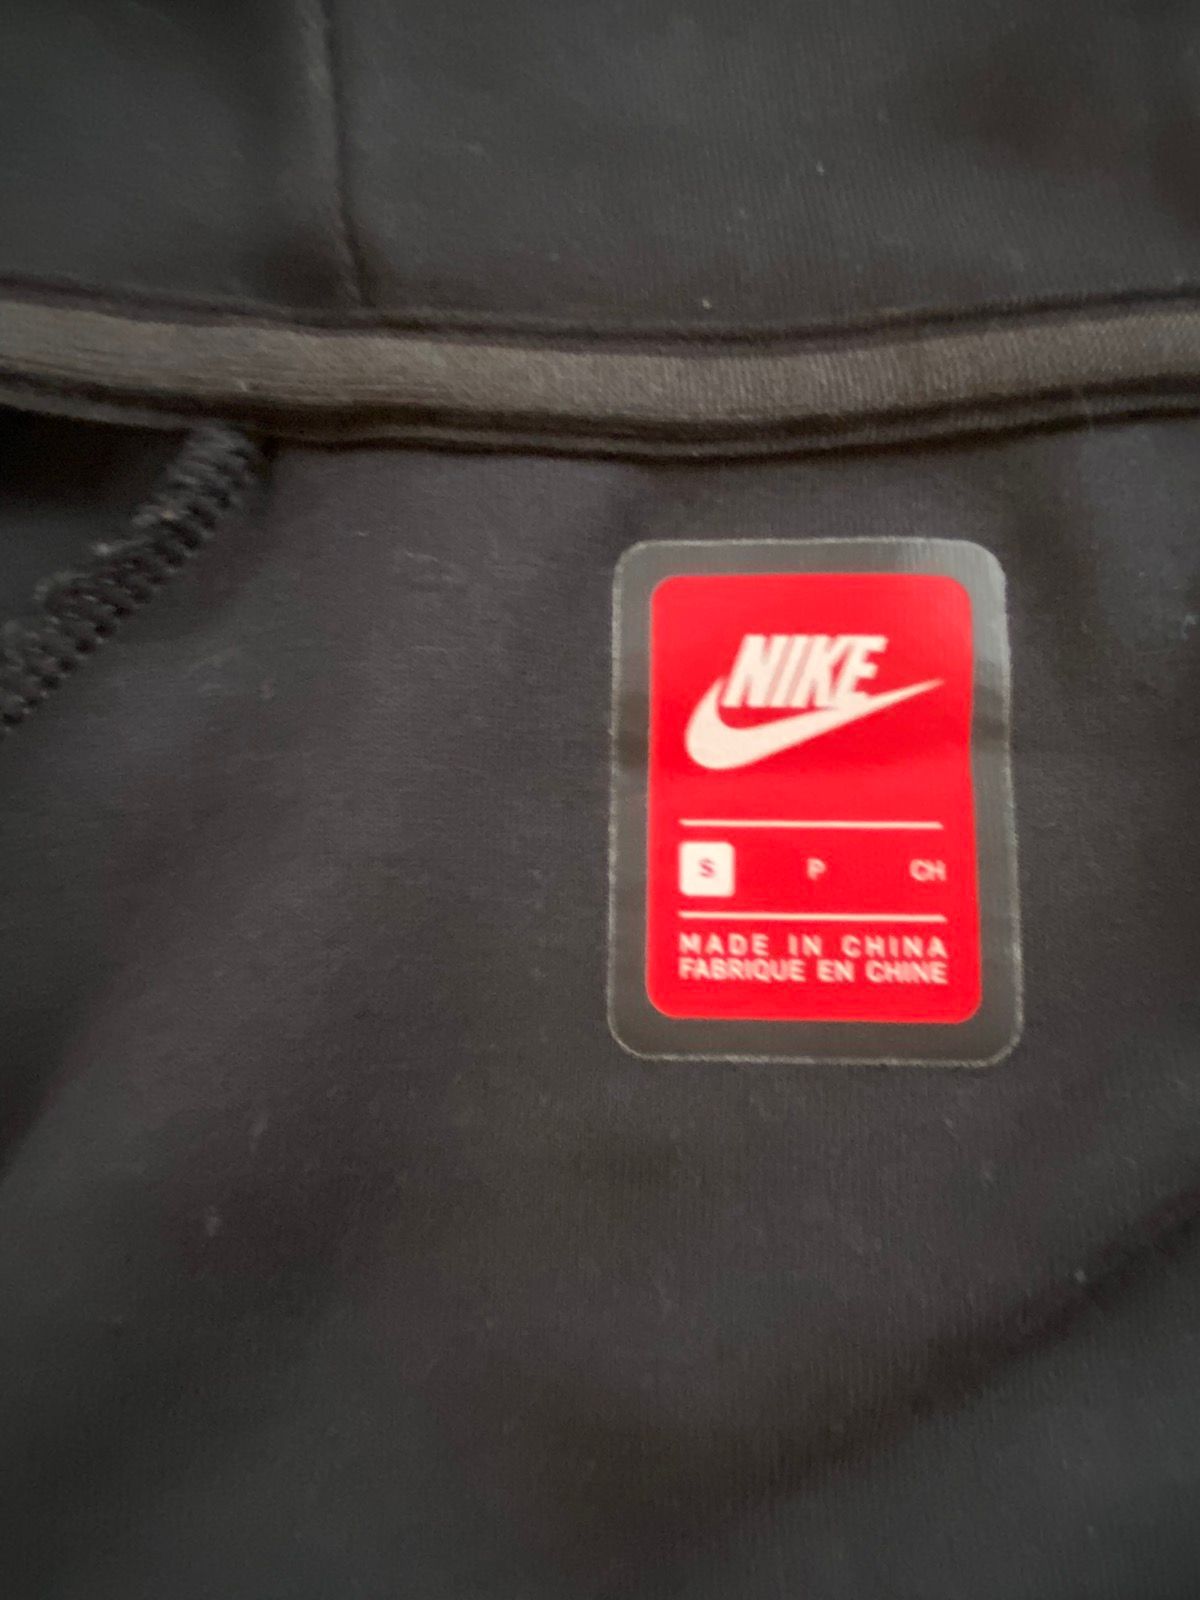 Nike Nike tech fleece Windrunner size small Size US S / EU 44-46 / 1 - 4 Thumbnail